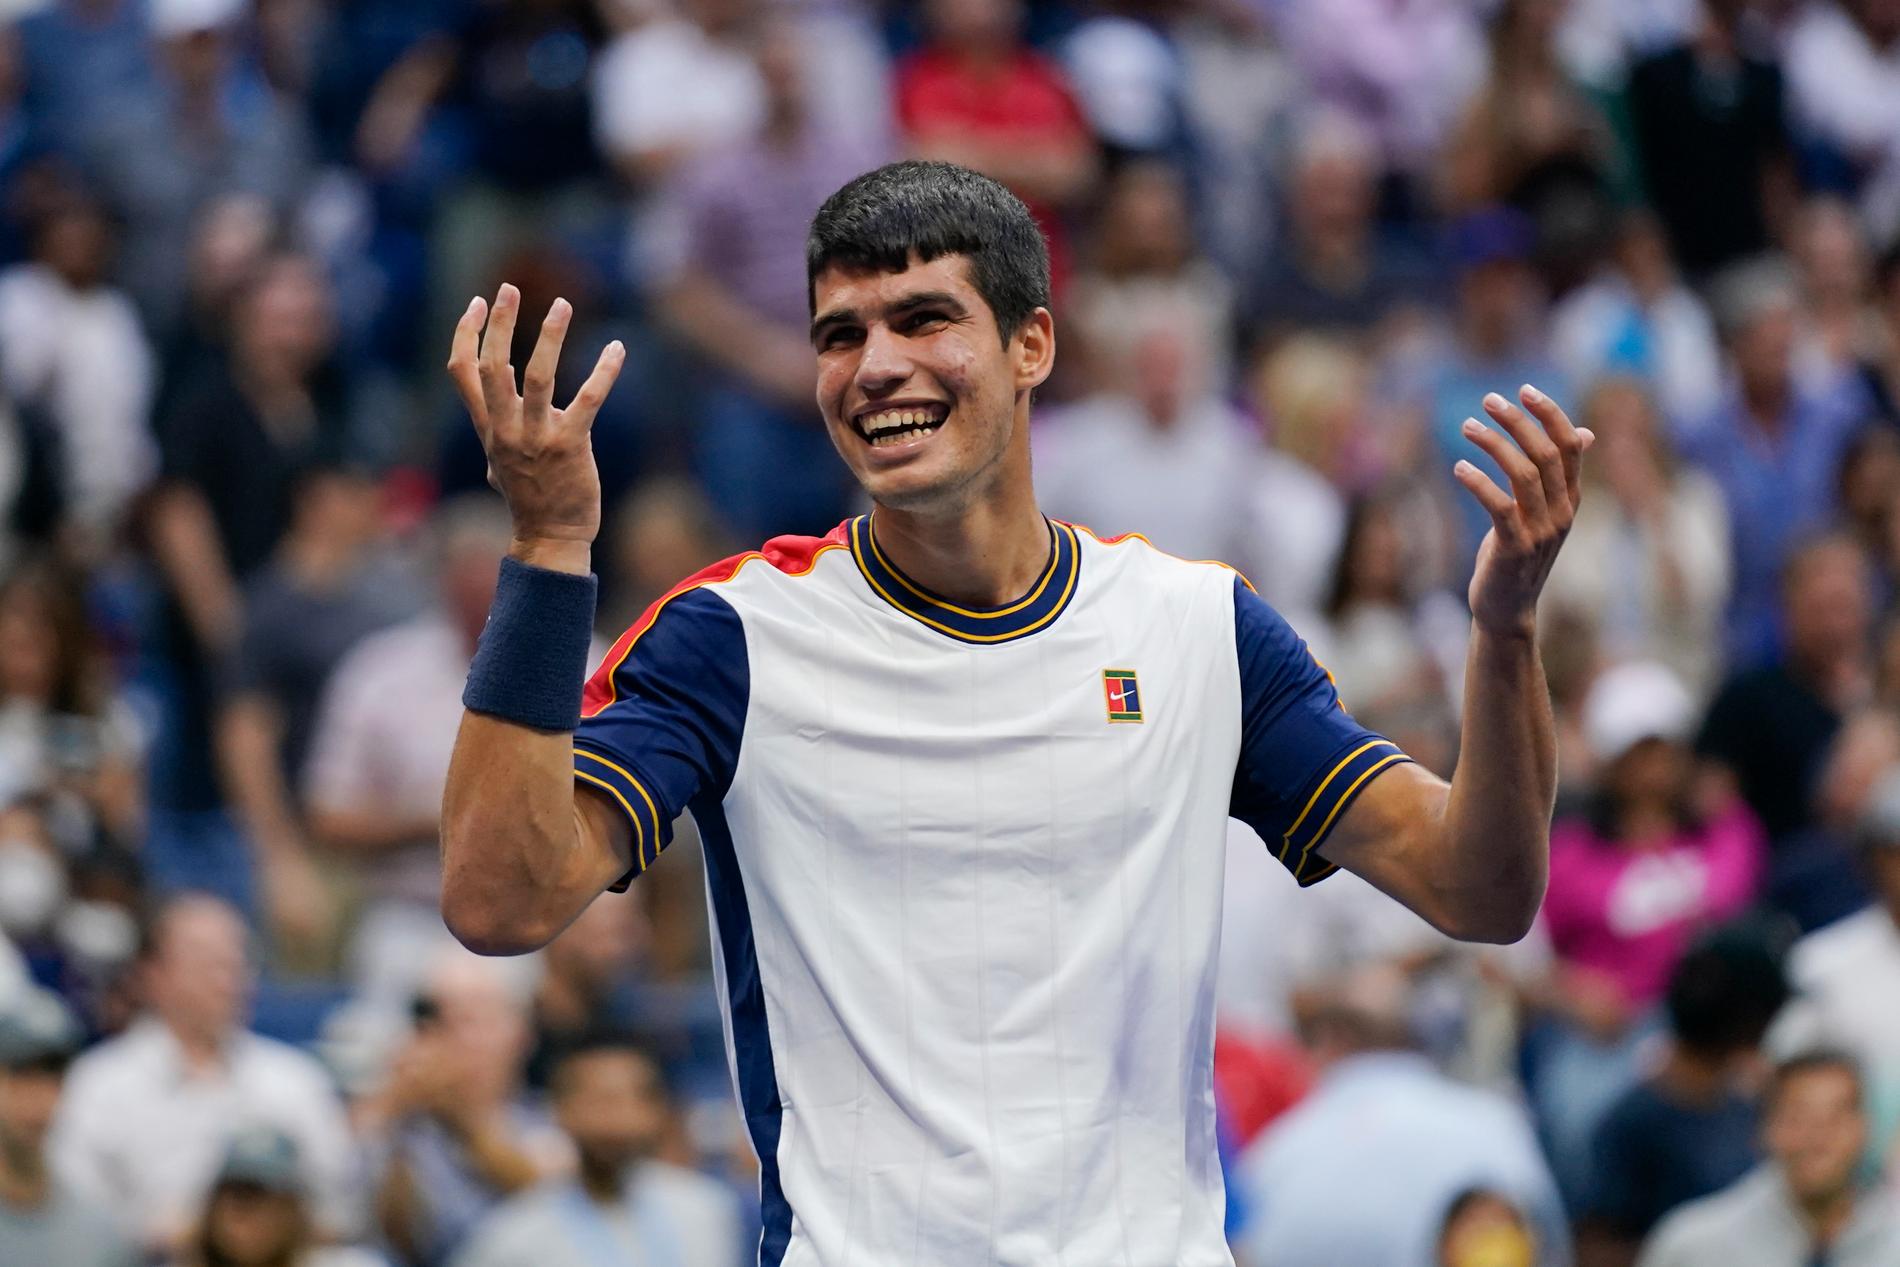 18-åringe spanjoren Carlos Alcaraz slog ut Stefanos Tsitsipas, Grekland, ur US Open.